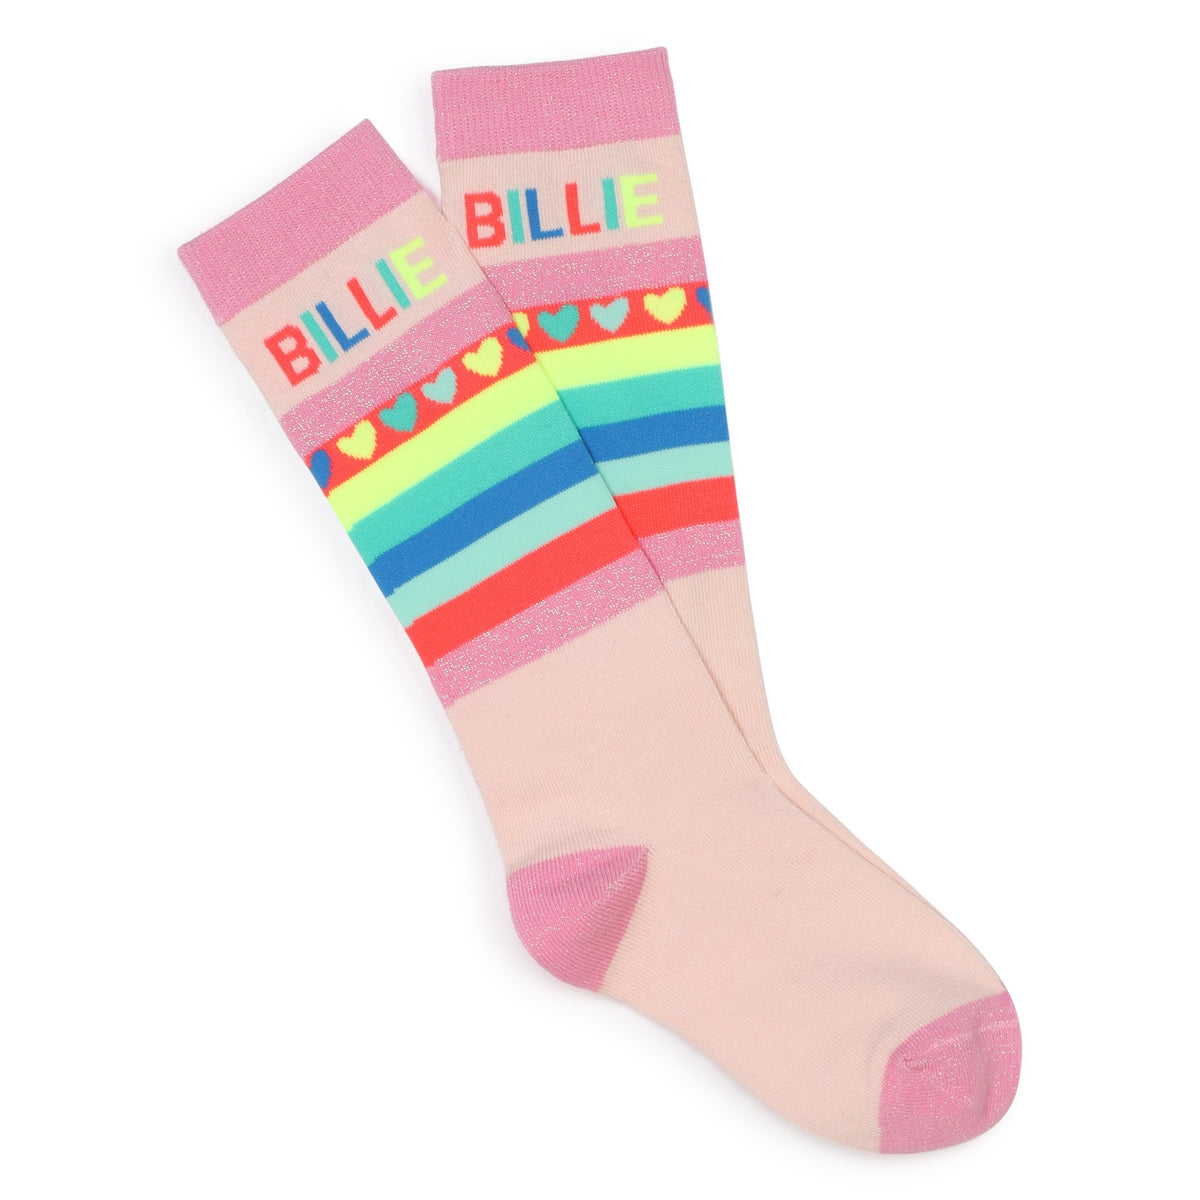 Billieblush Girls Pink Knee High Socks